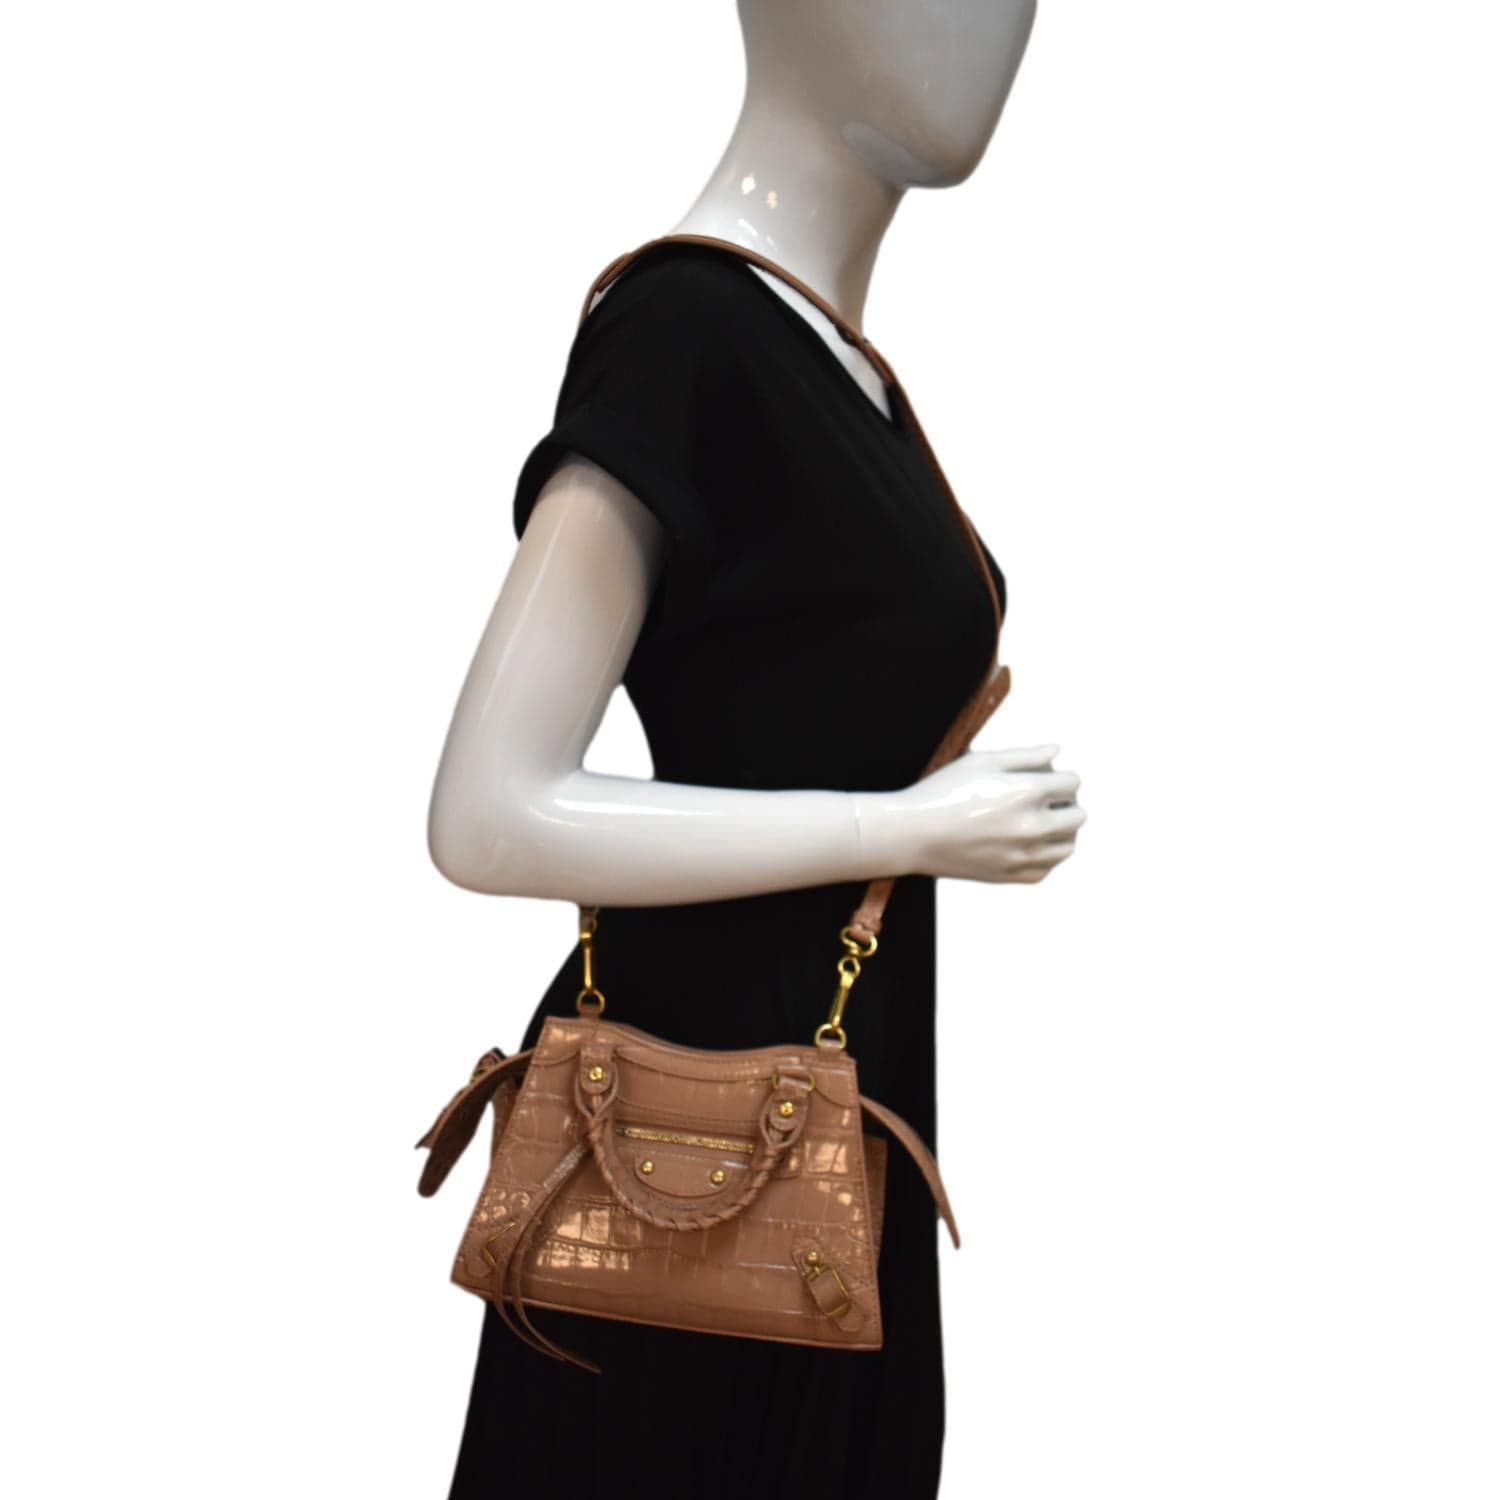 Balenciaga Ville Top Handle Shoulder bag 393755  Collector Square